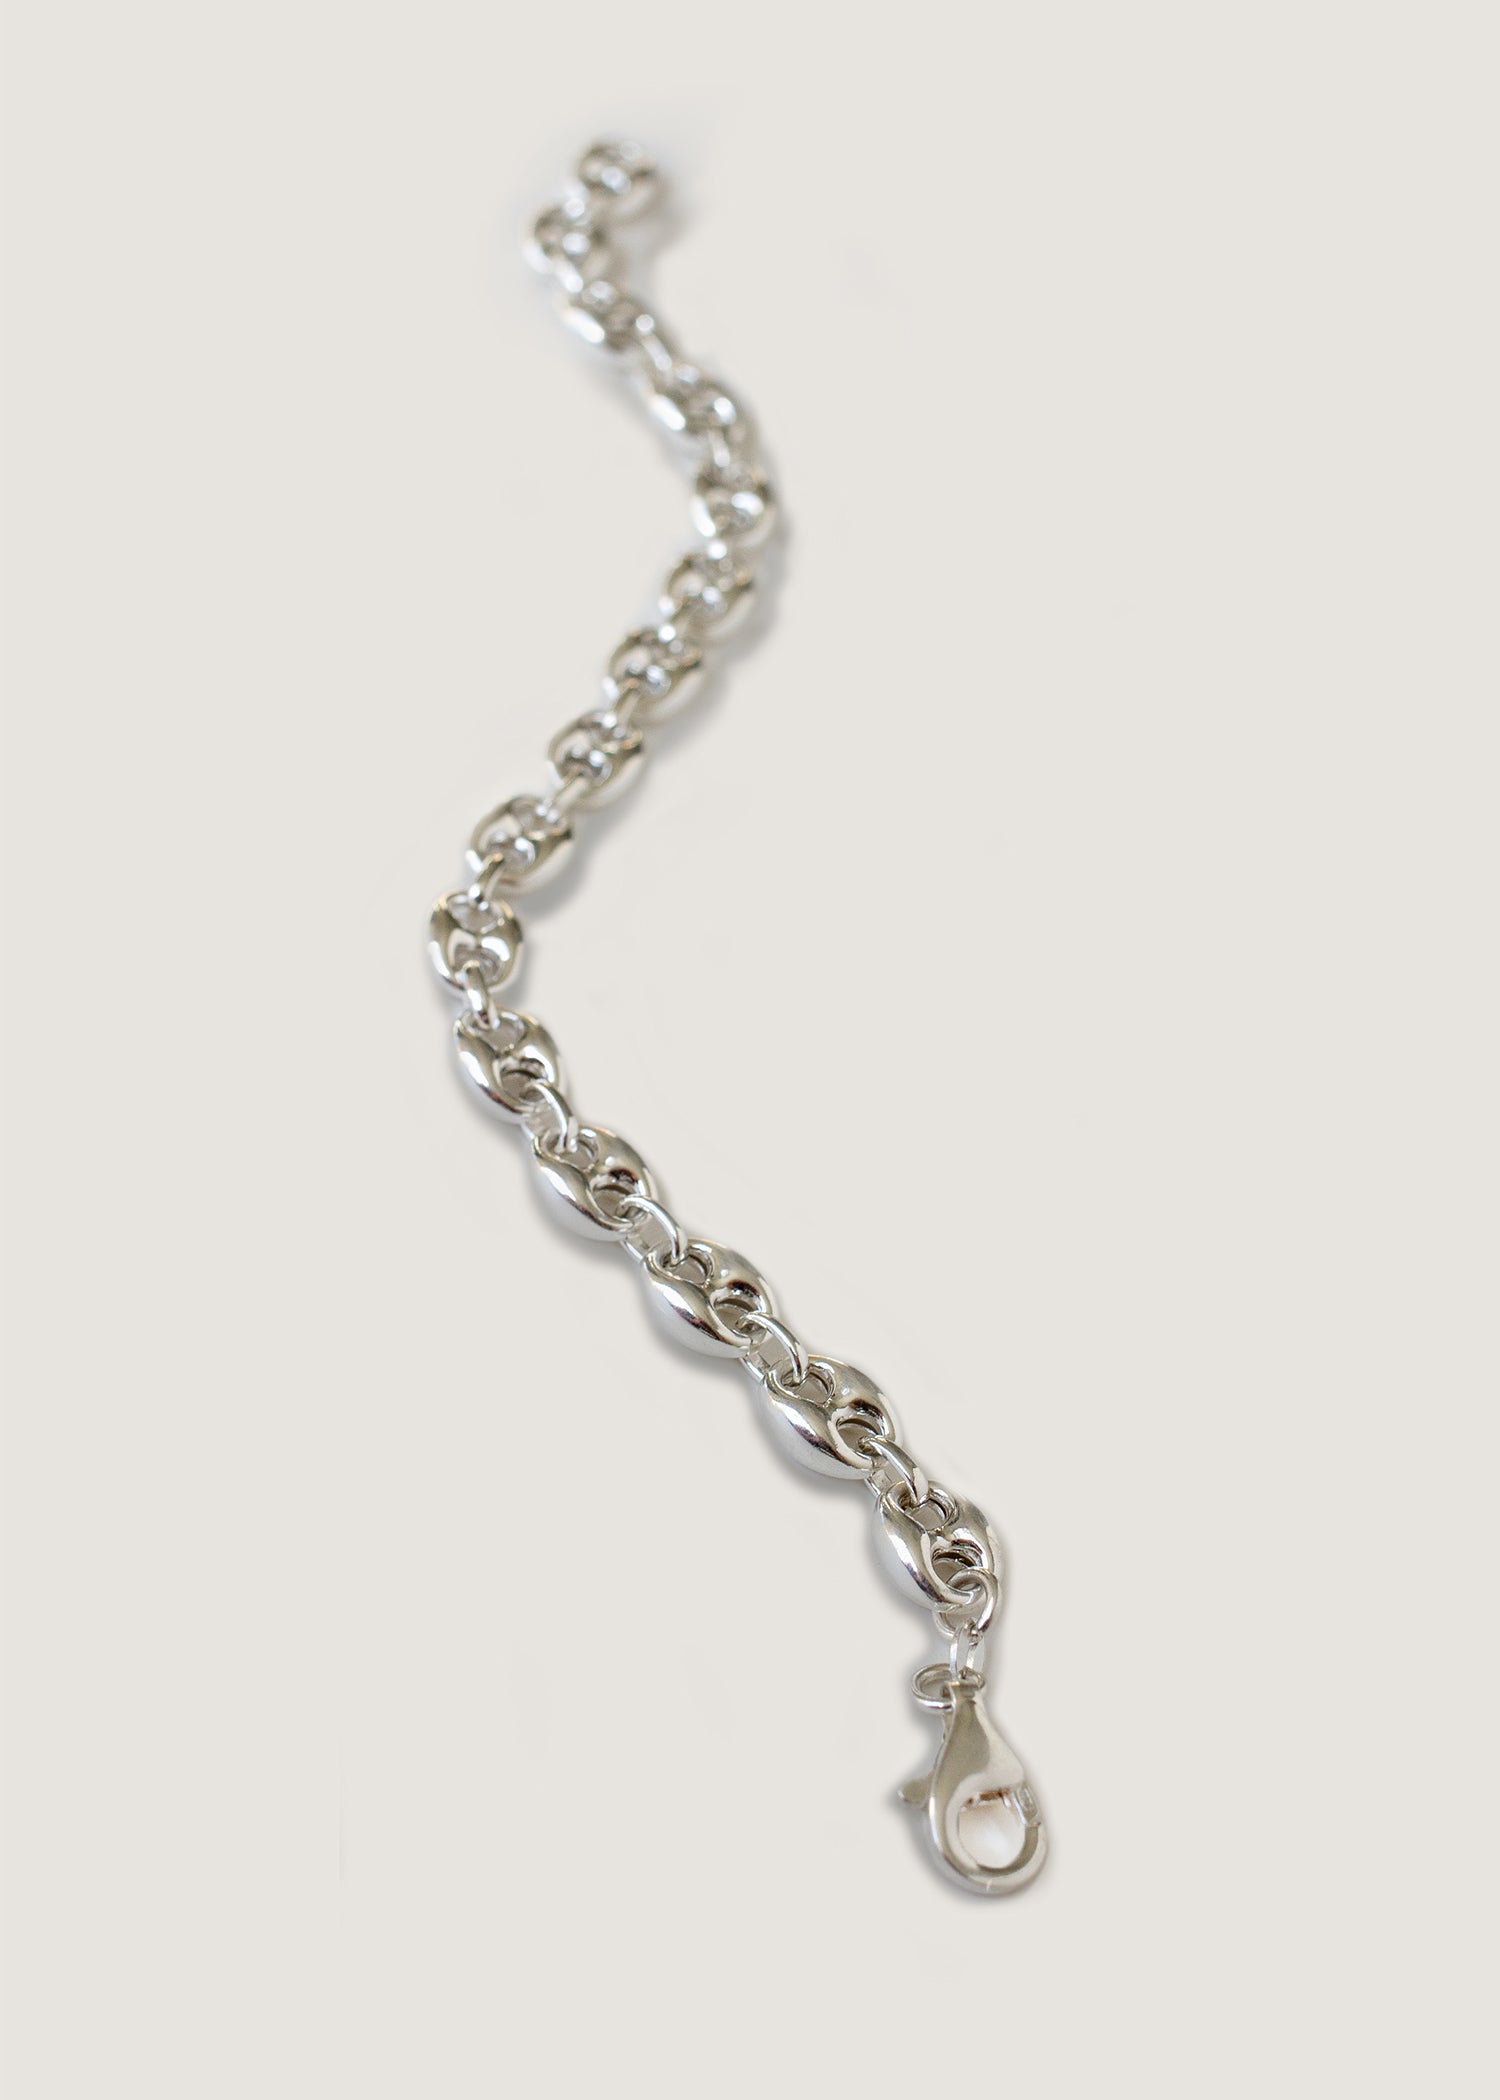 alt="Puffed Marner Chain Bracelet"